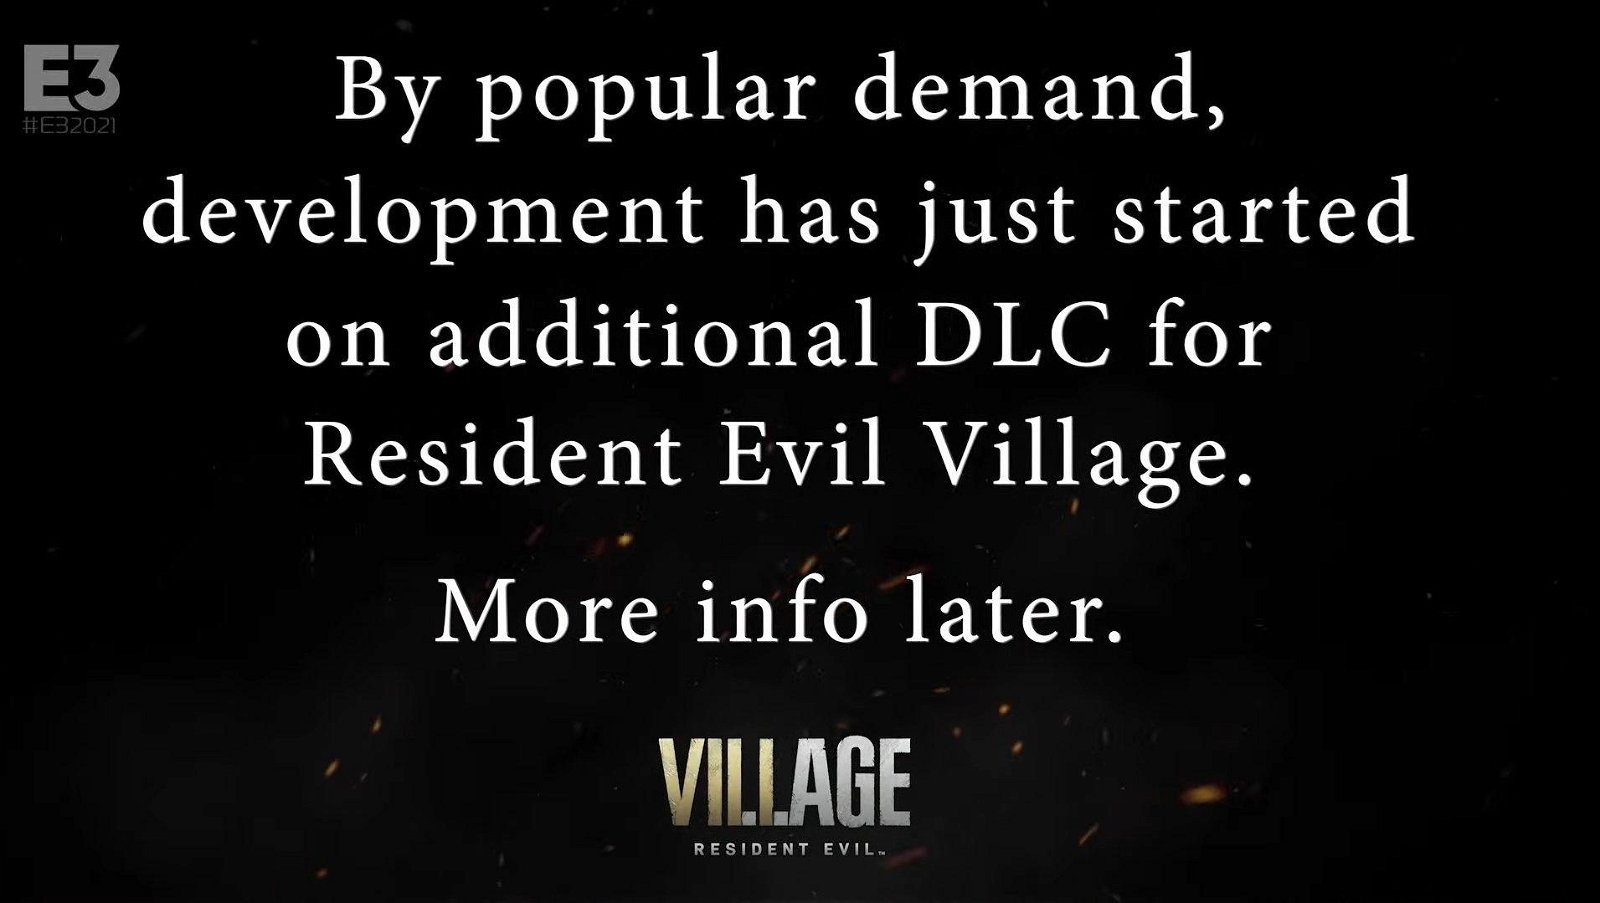 Capcom Resident Evil Village DLC development